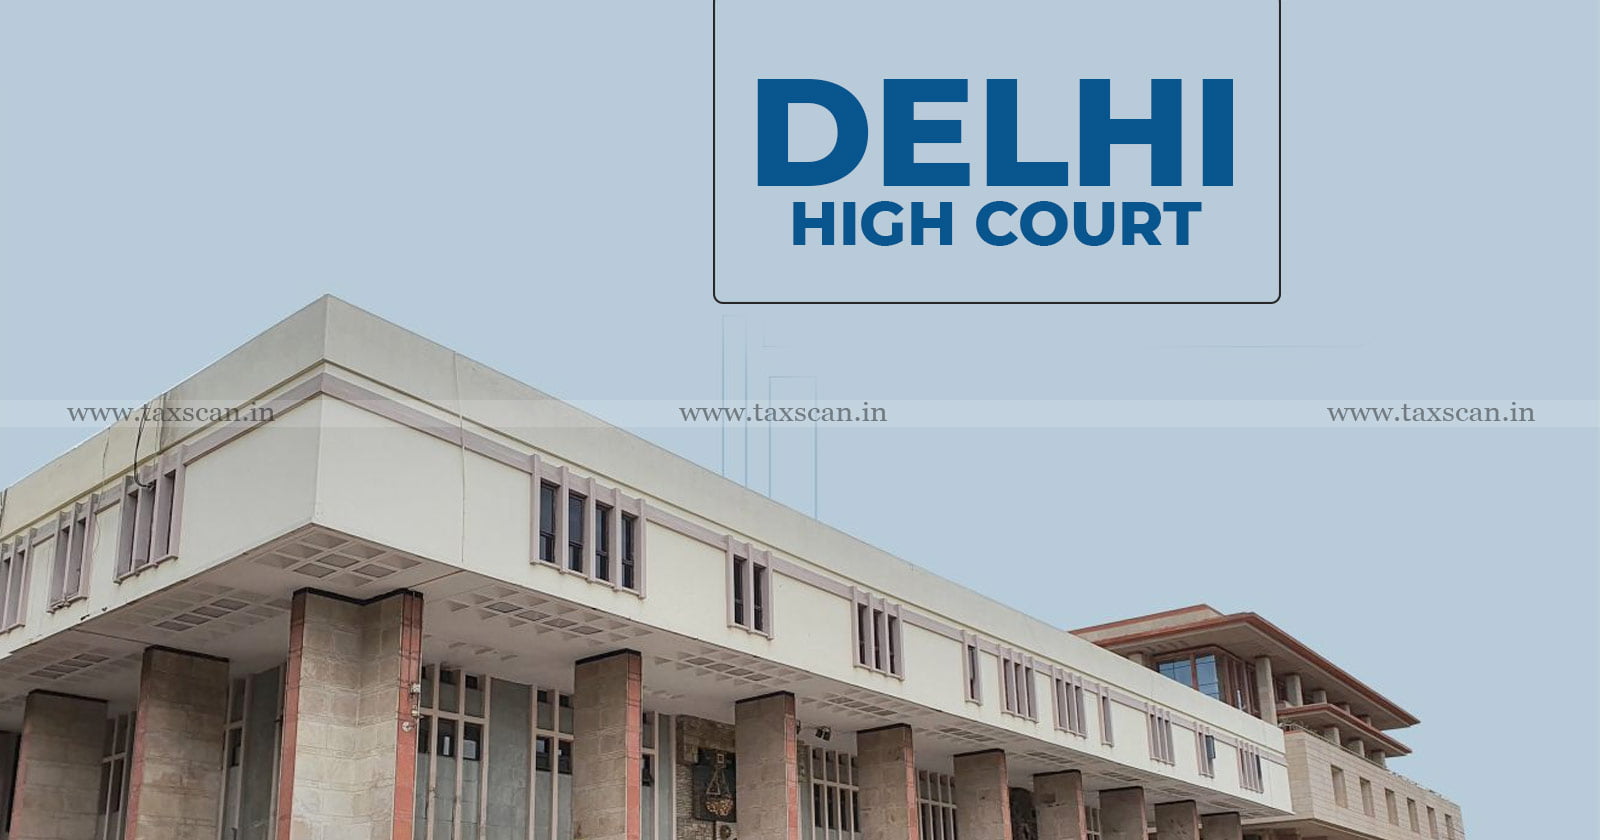 Delhi High Court - Bank - Refund - Auditor - Bank Account - Taxscan